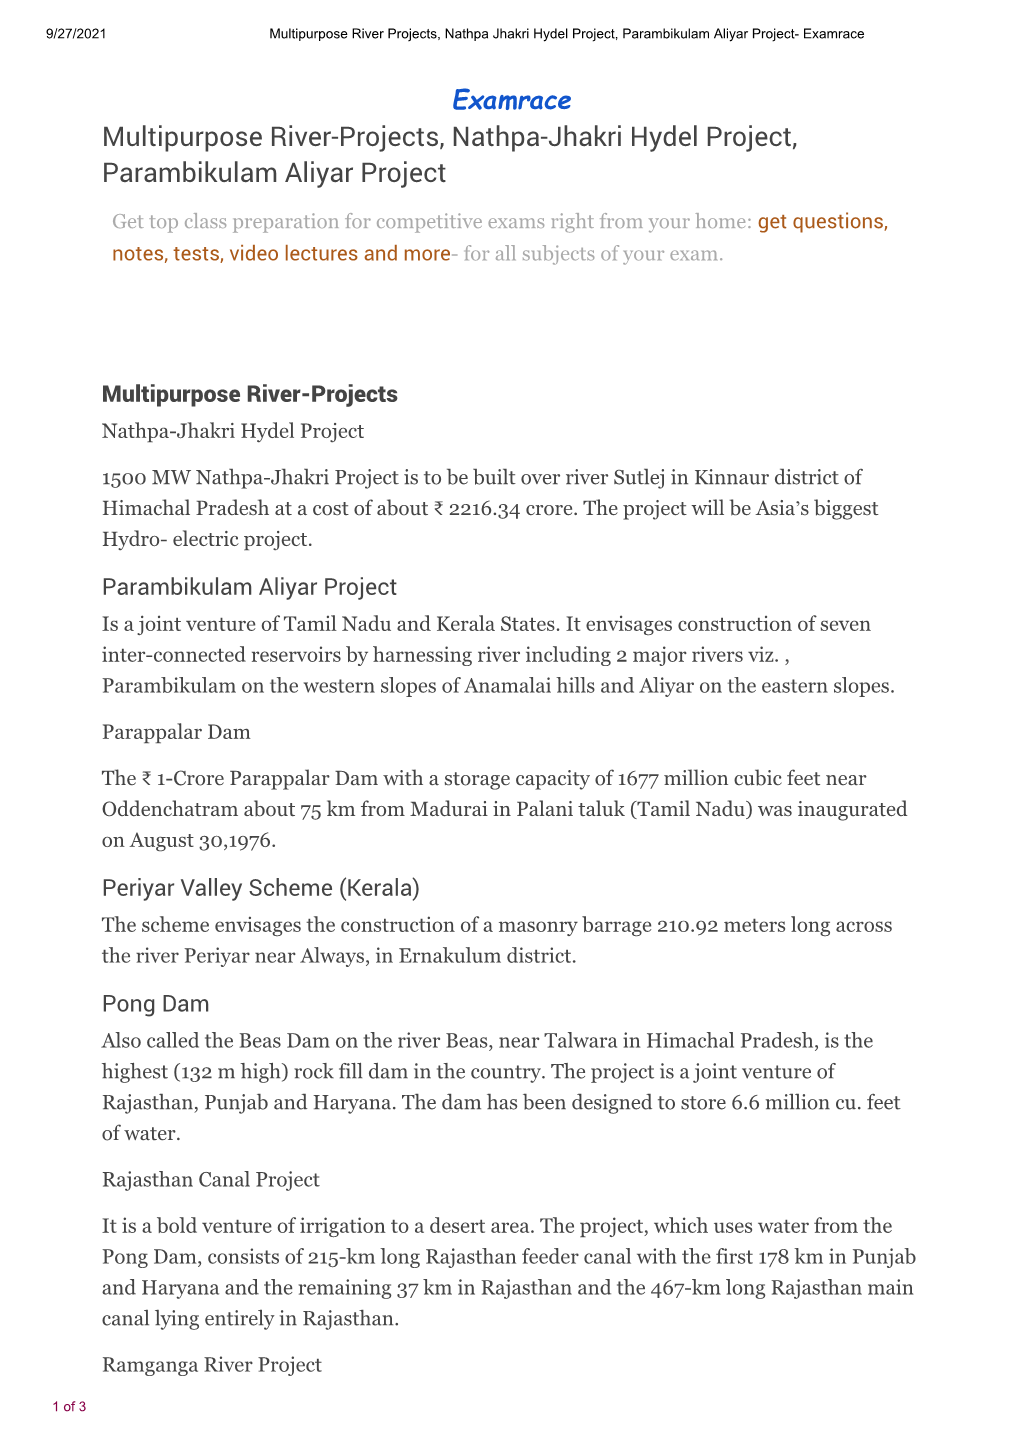 Multipurpose River-Projects, Nathpa-Jhakri Hydel Project, Parambikulam Aliyar Project